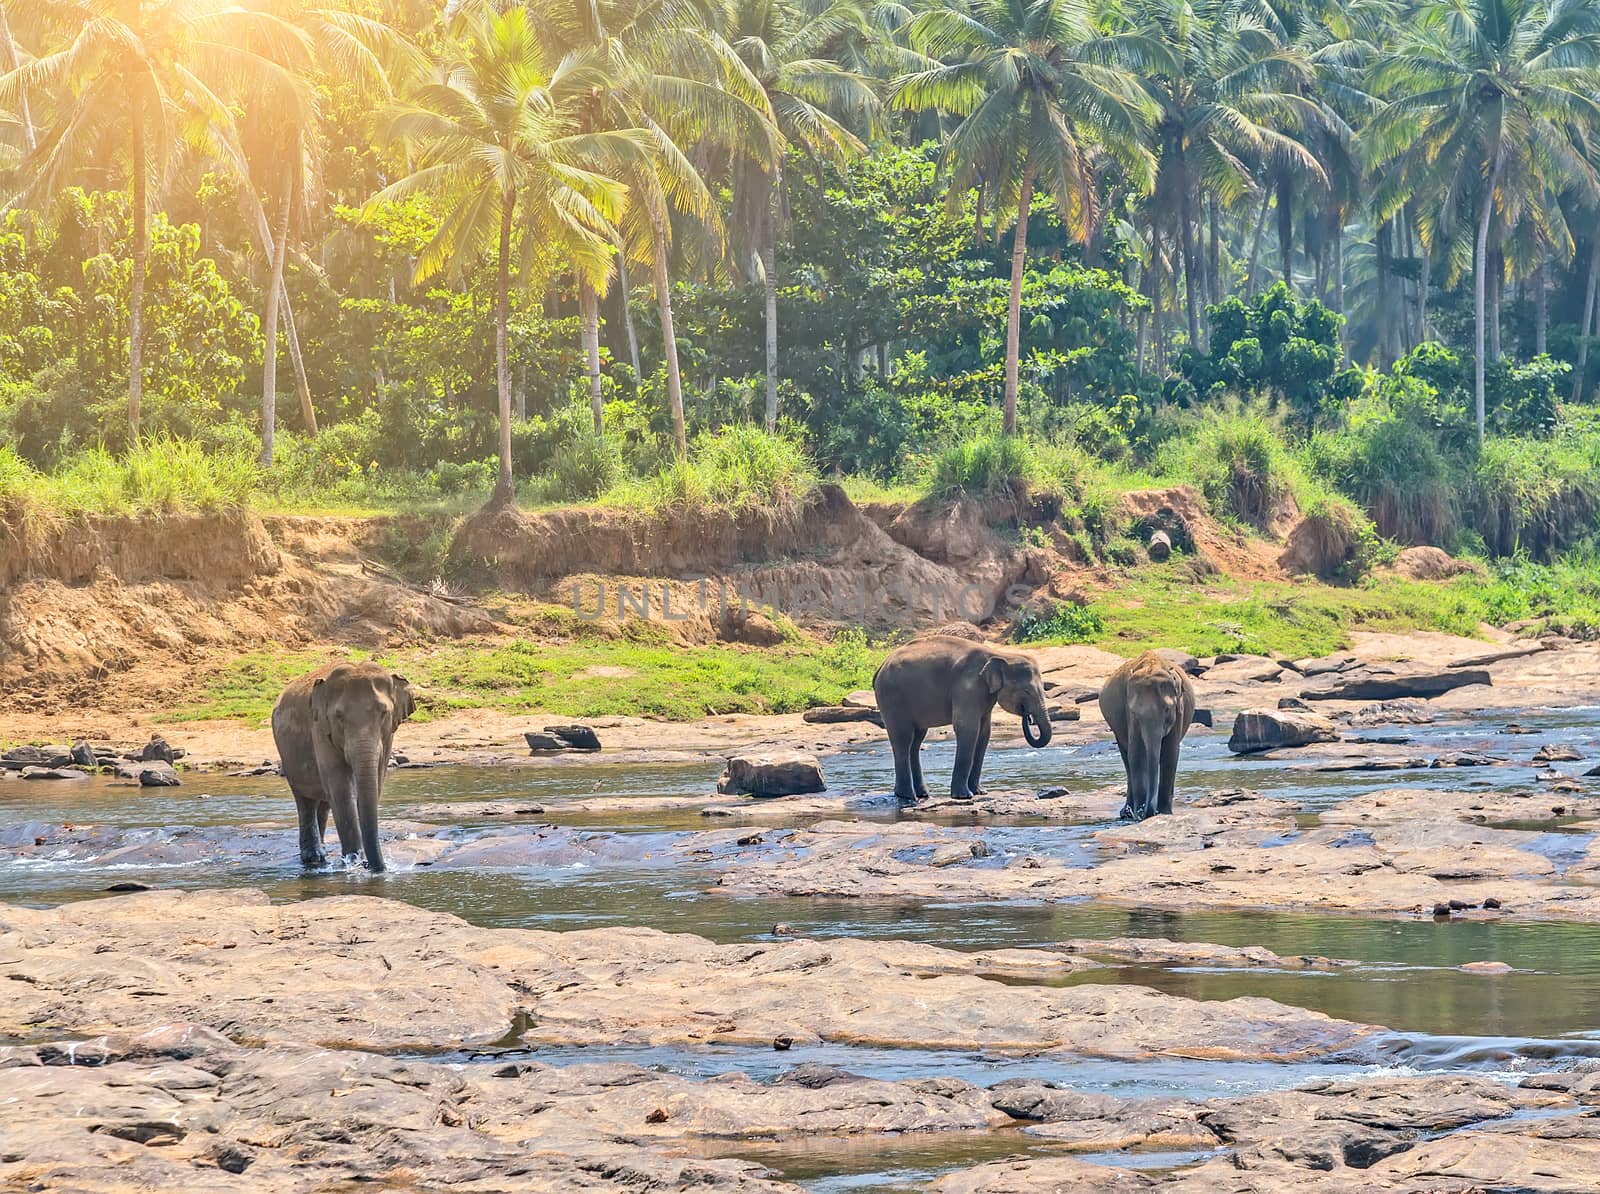 Elephants herd washing attraction river. Pinnawala elephant orphanage, Sri Lanka